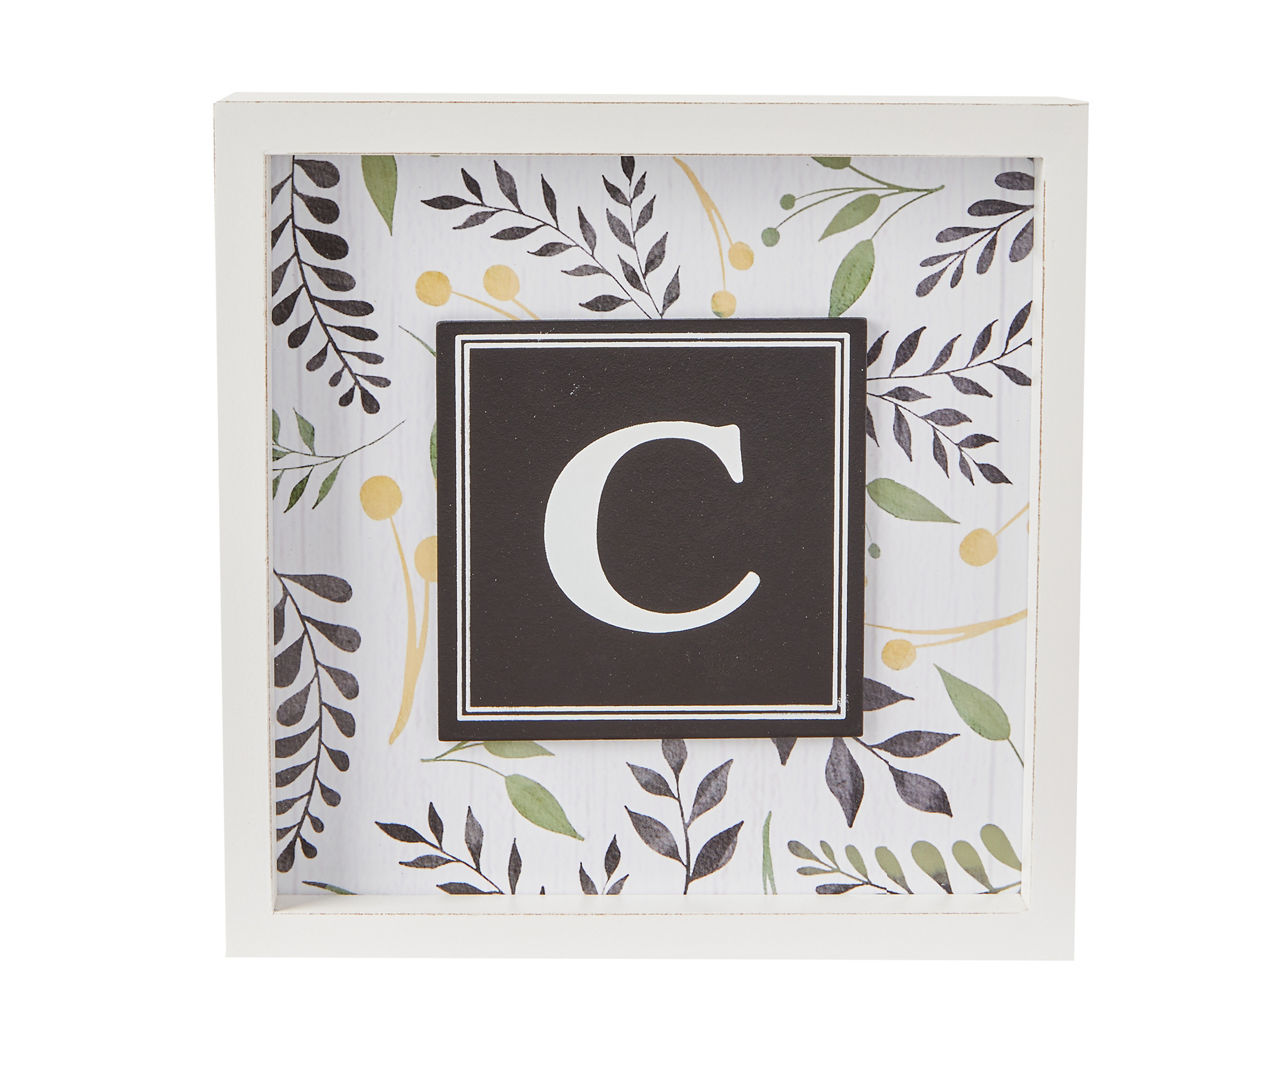 "C" White & Black Leaf Monogram Framed Wall Plaque